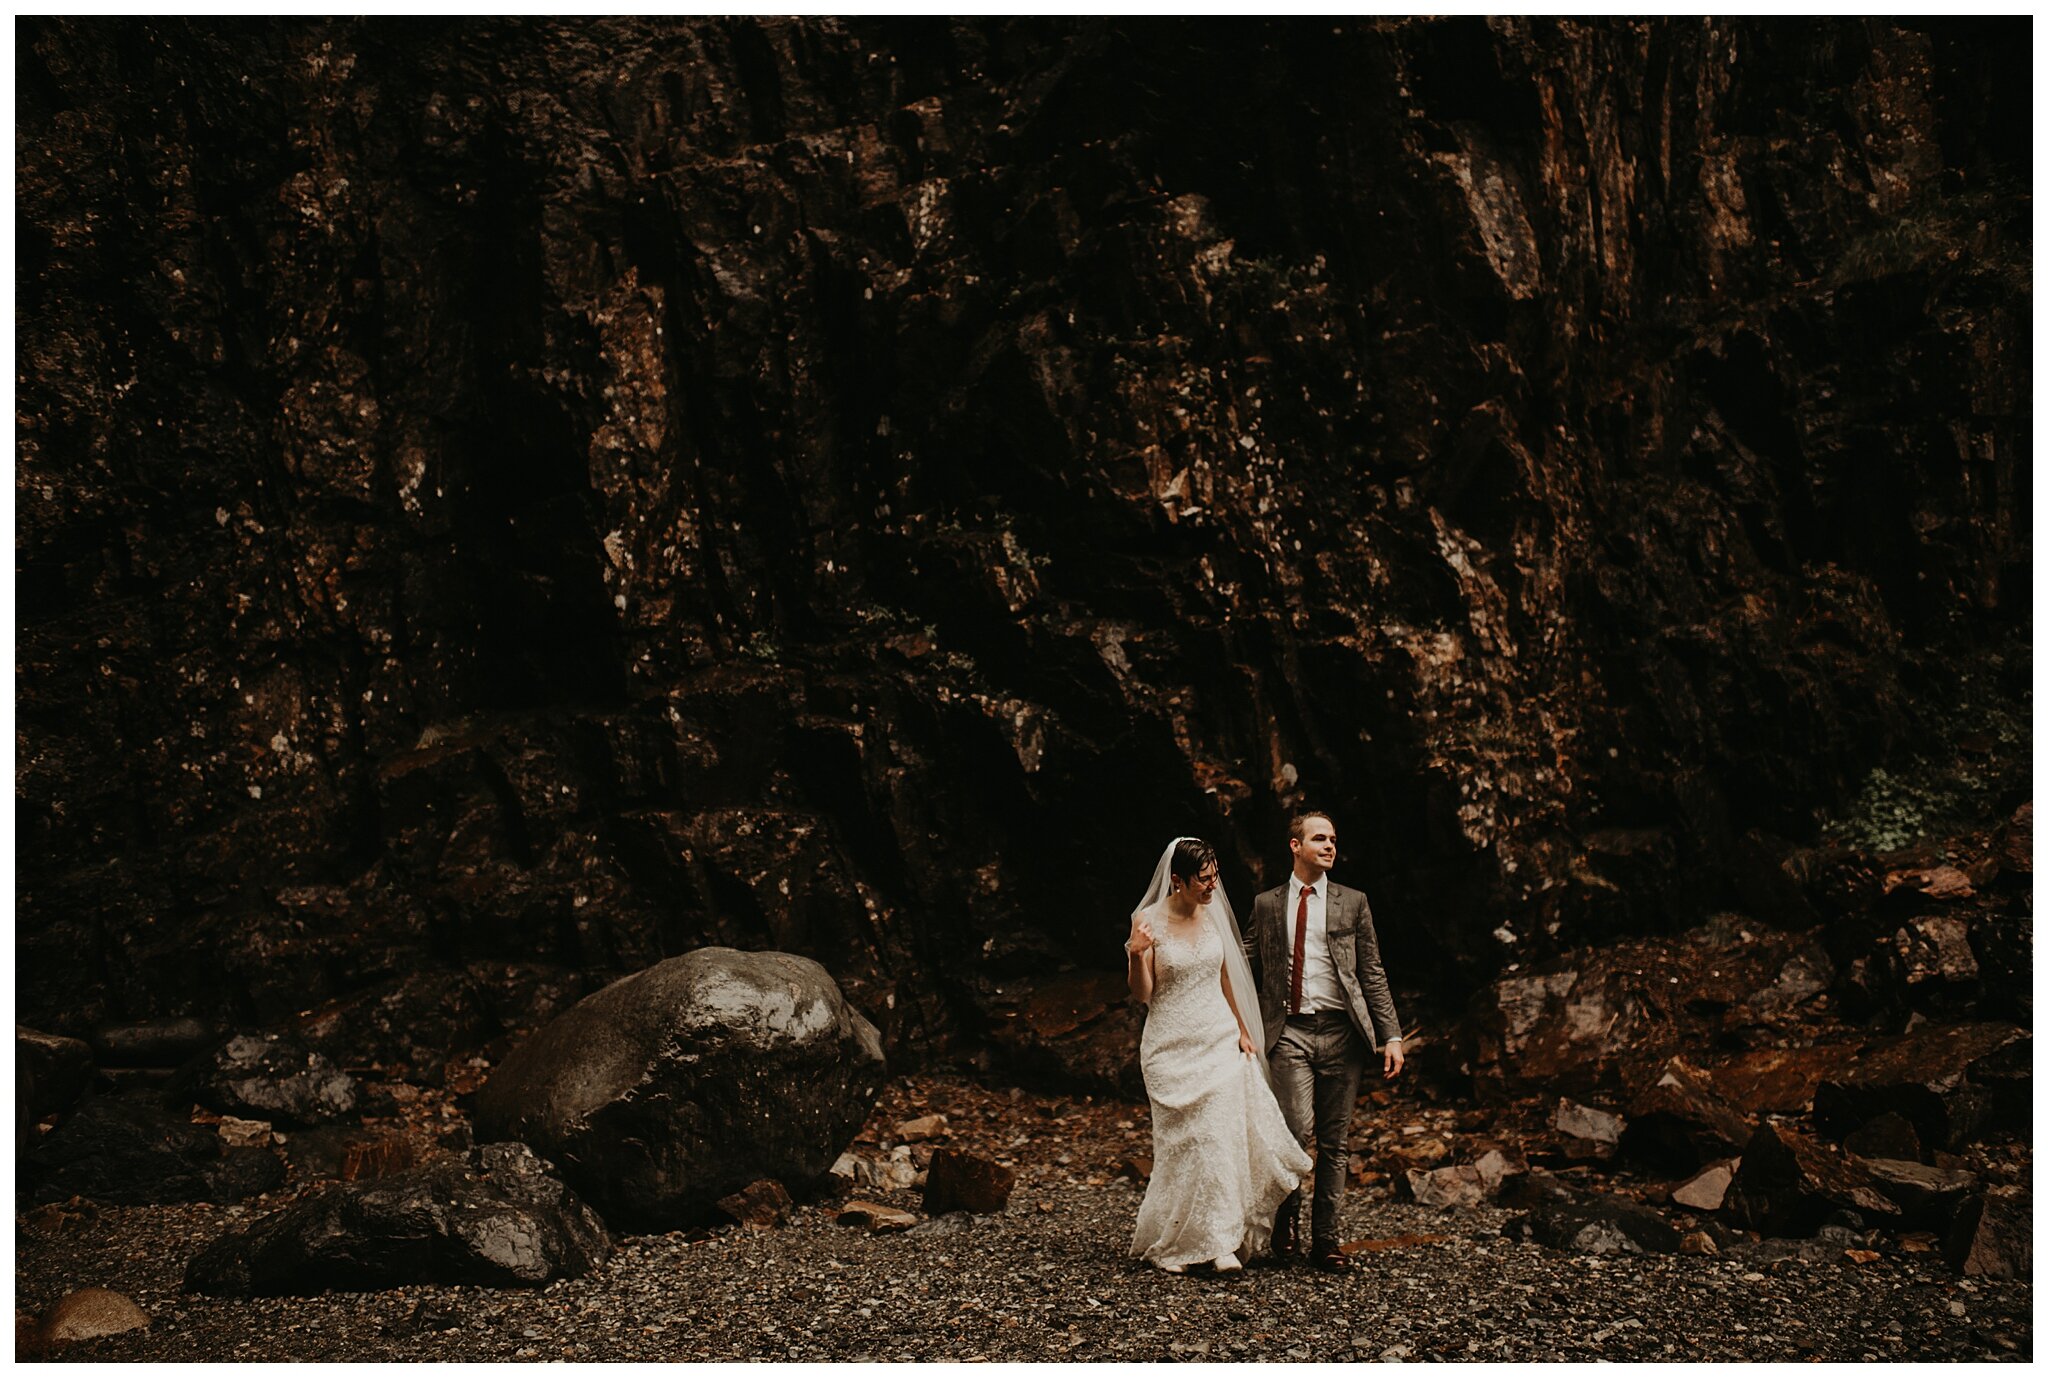 Layla + Kodiak Wedding Portraits - Franklin Falls, Snoqualmie, WA - Kamra Fuller Photography